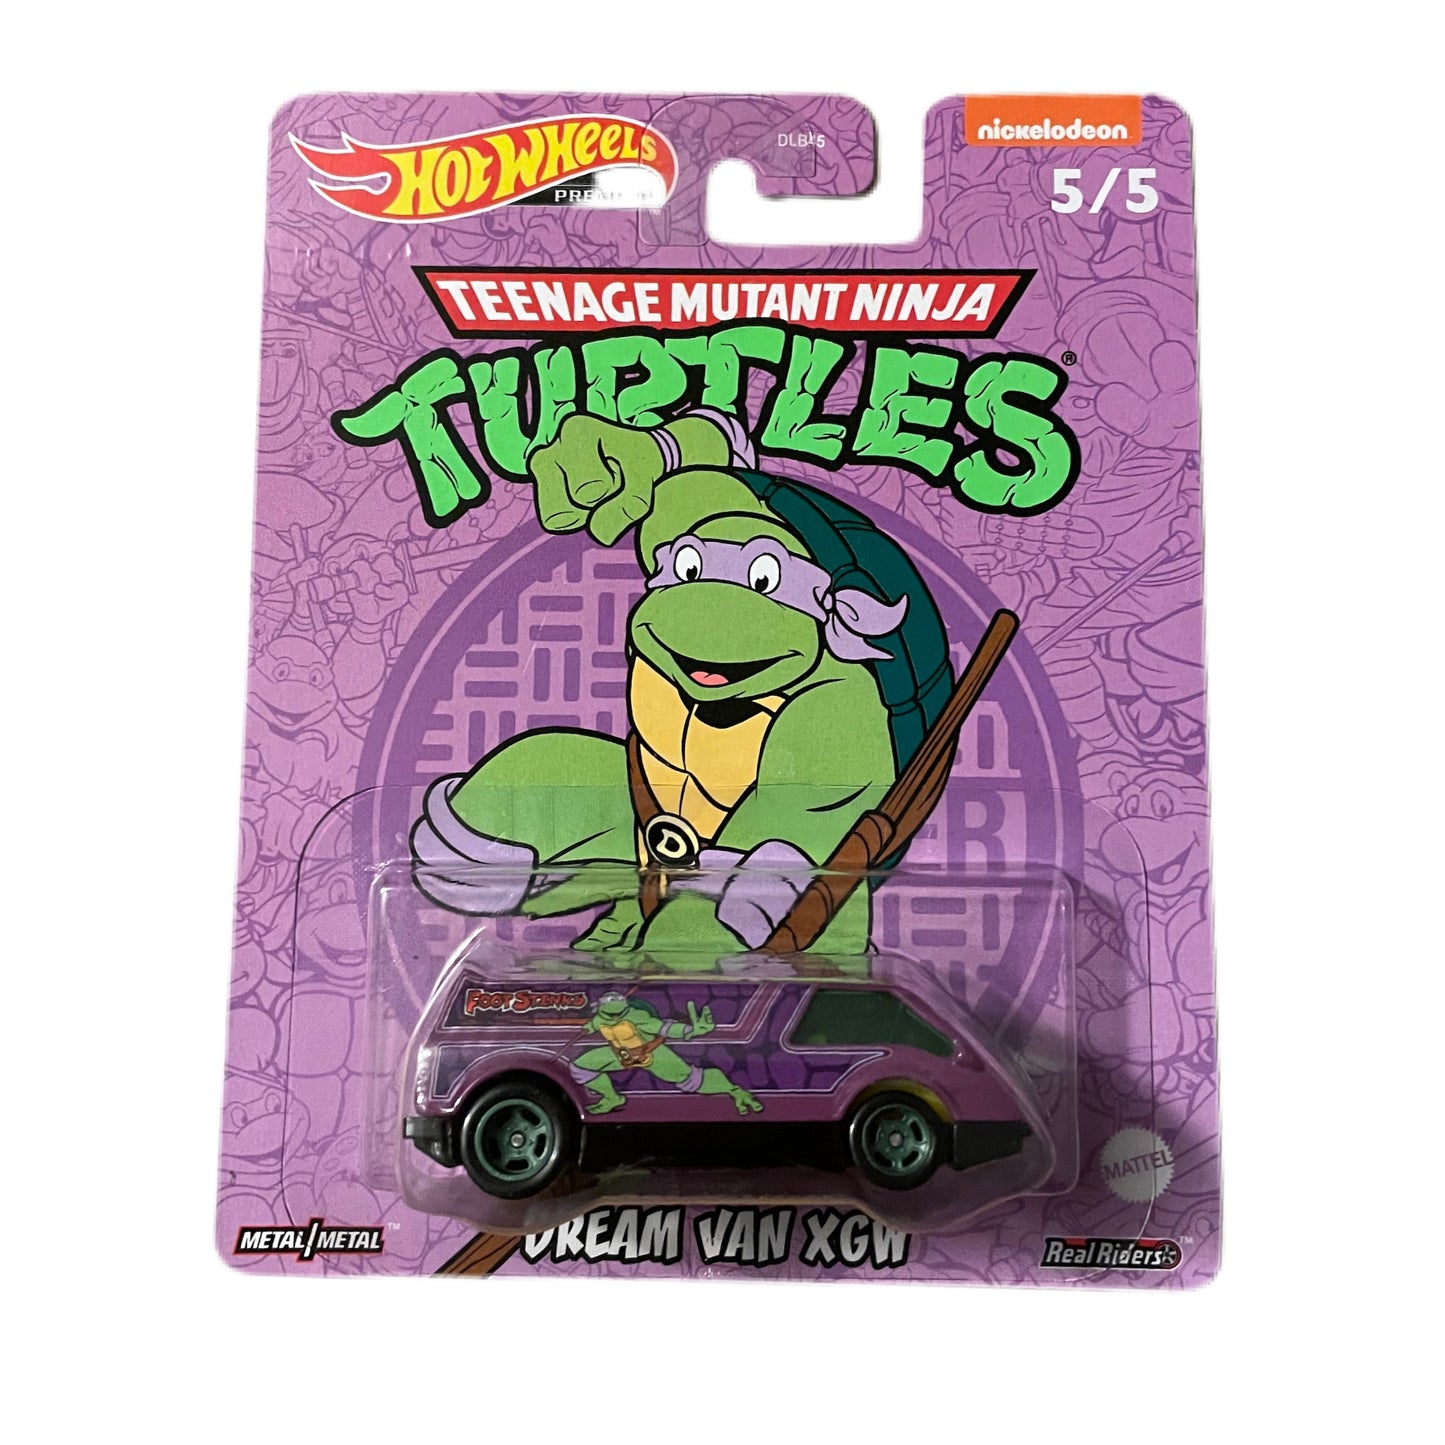 Hot Wheels Premium Teenage Mutant Ninja Turtles Dream Van XGW